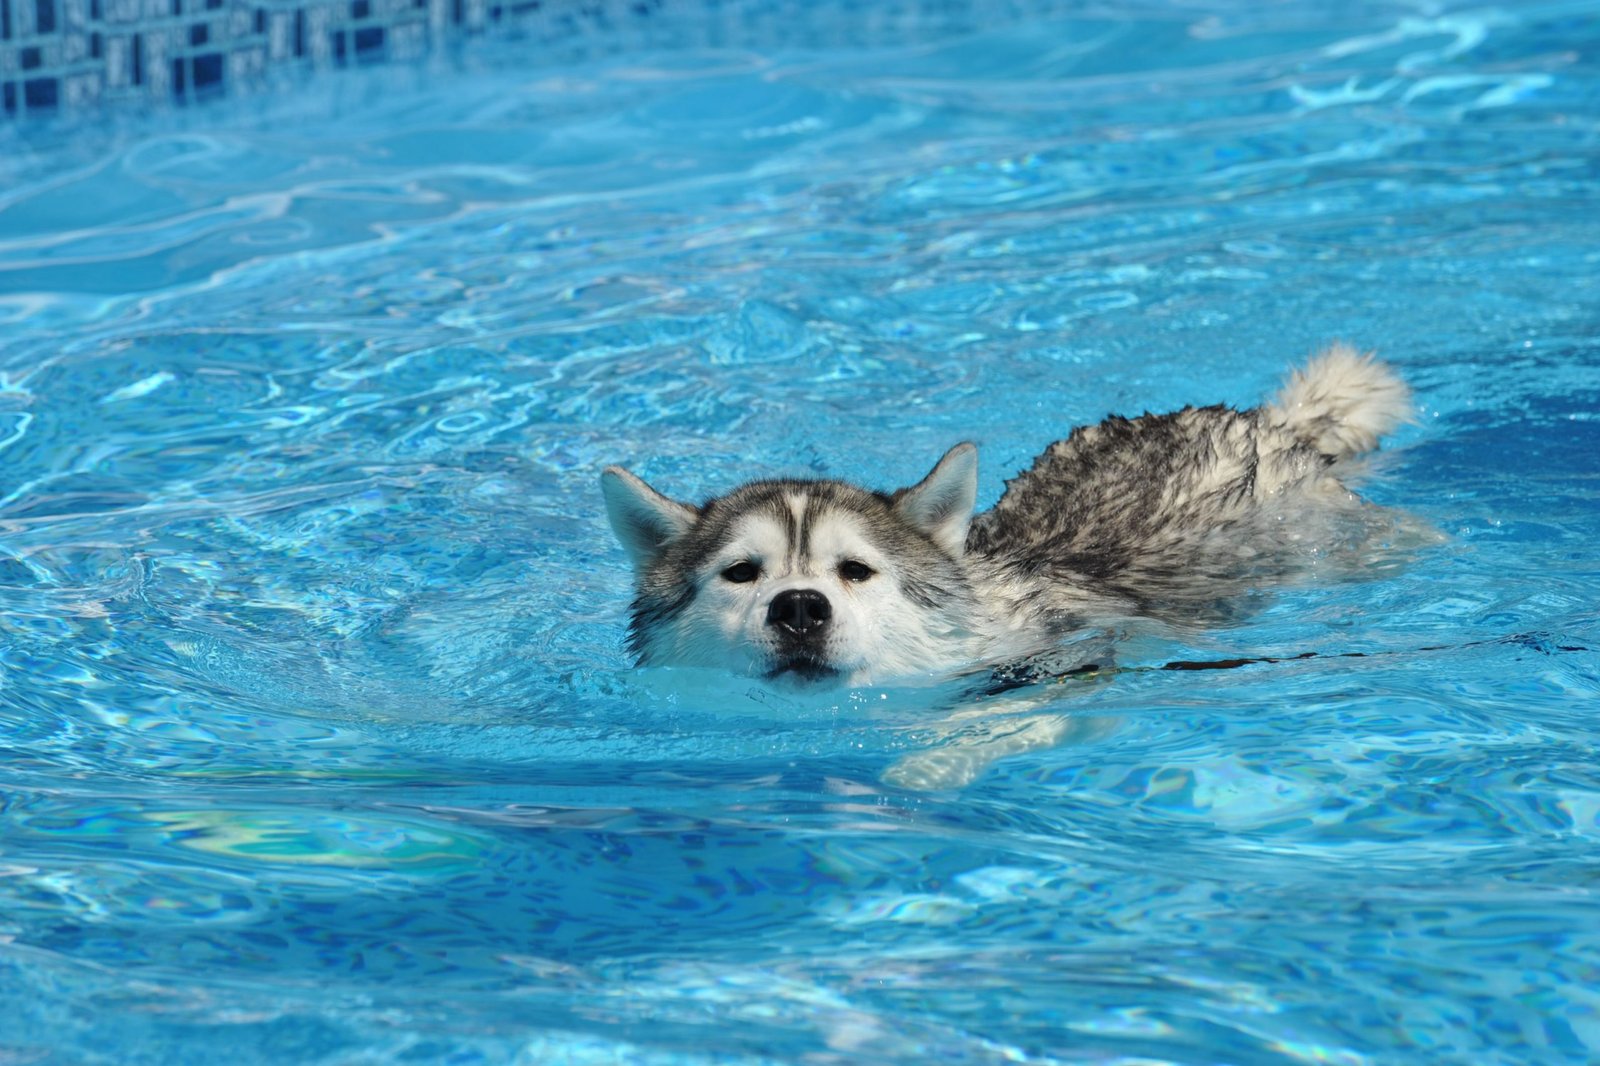 "Husky Swimming"